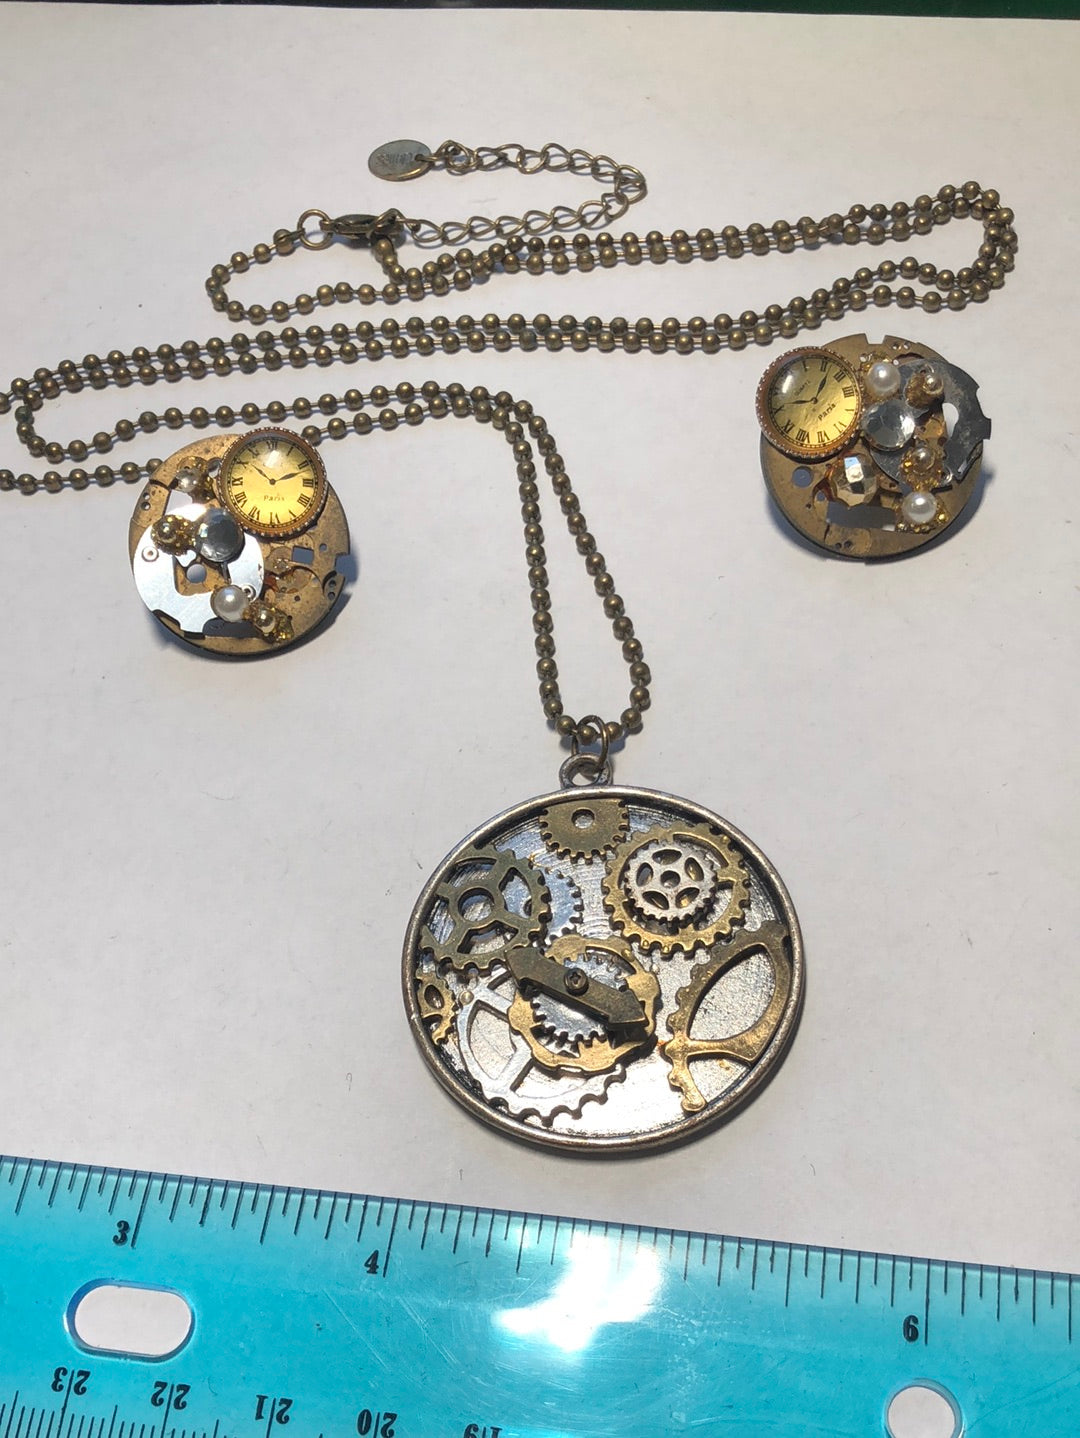 Handmade Clockwork Steampunk pendant necklace earrings set bronze tone